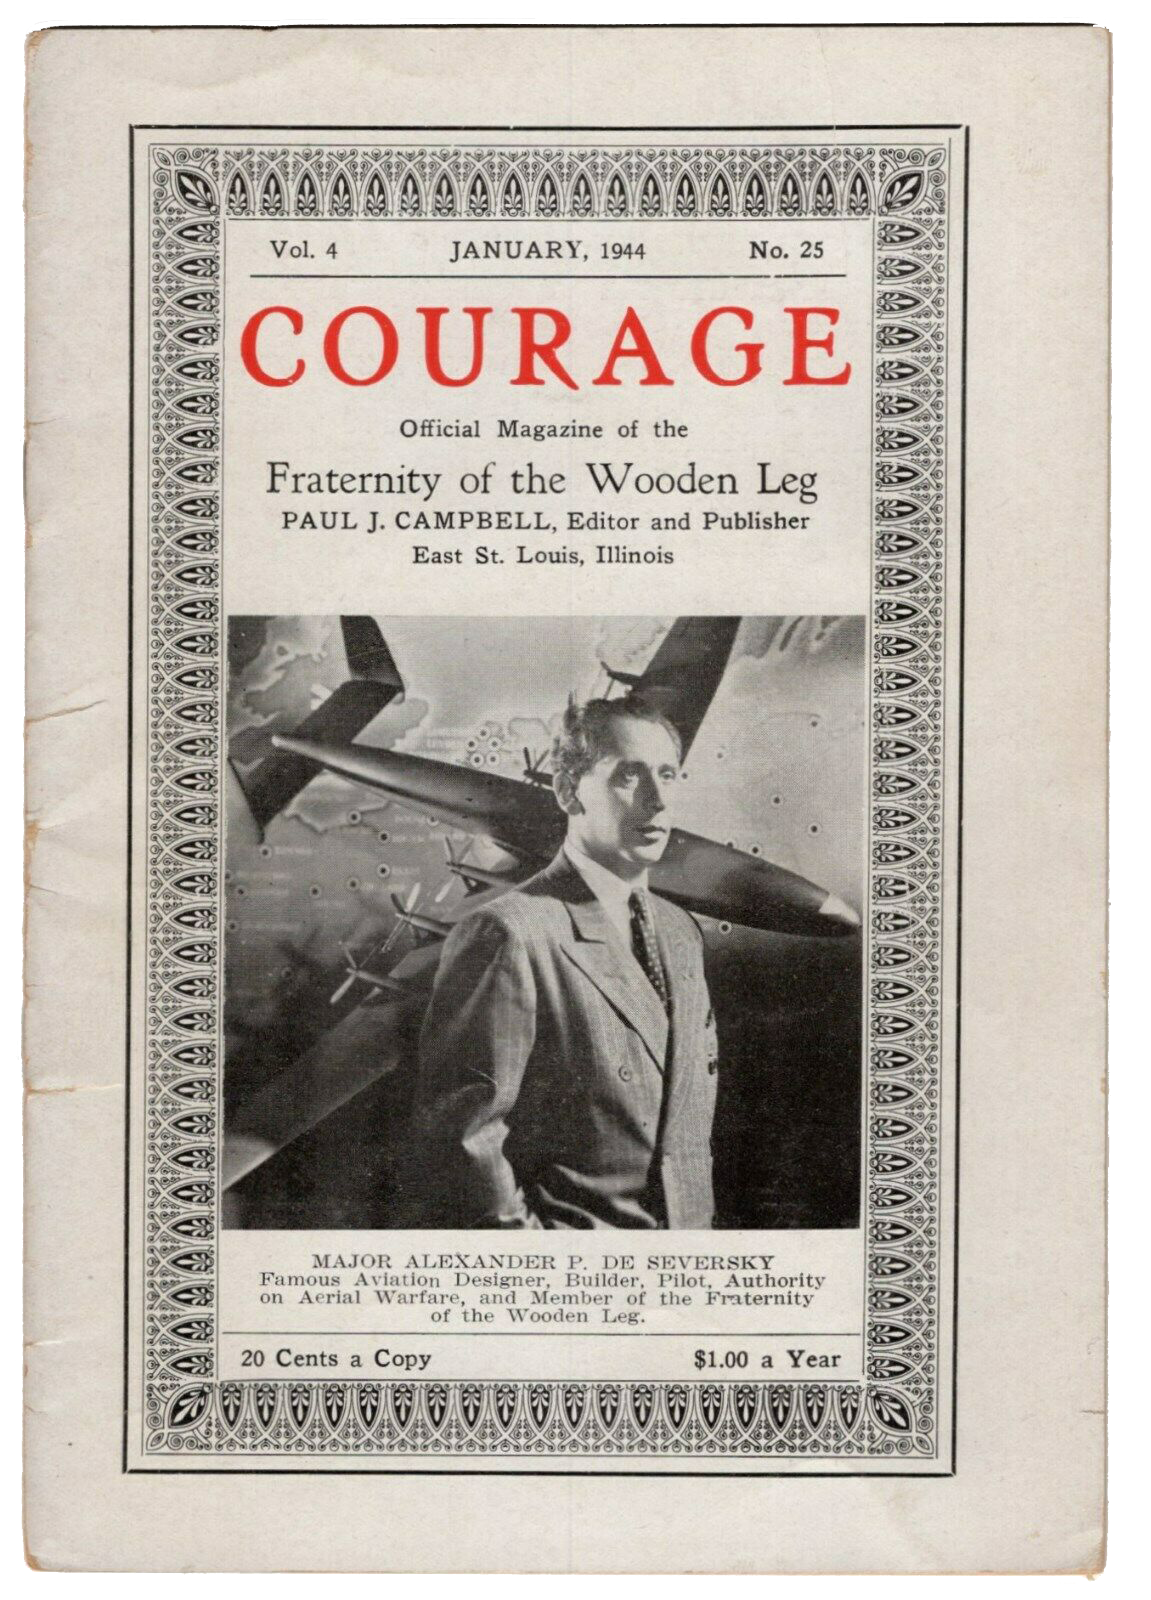 Courage magazine cover